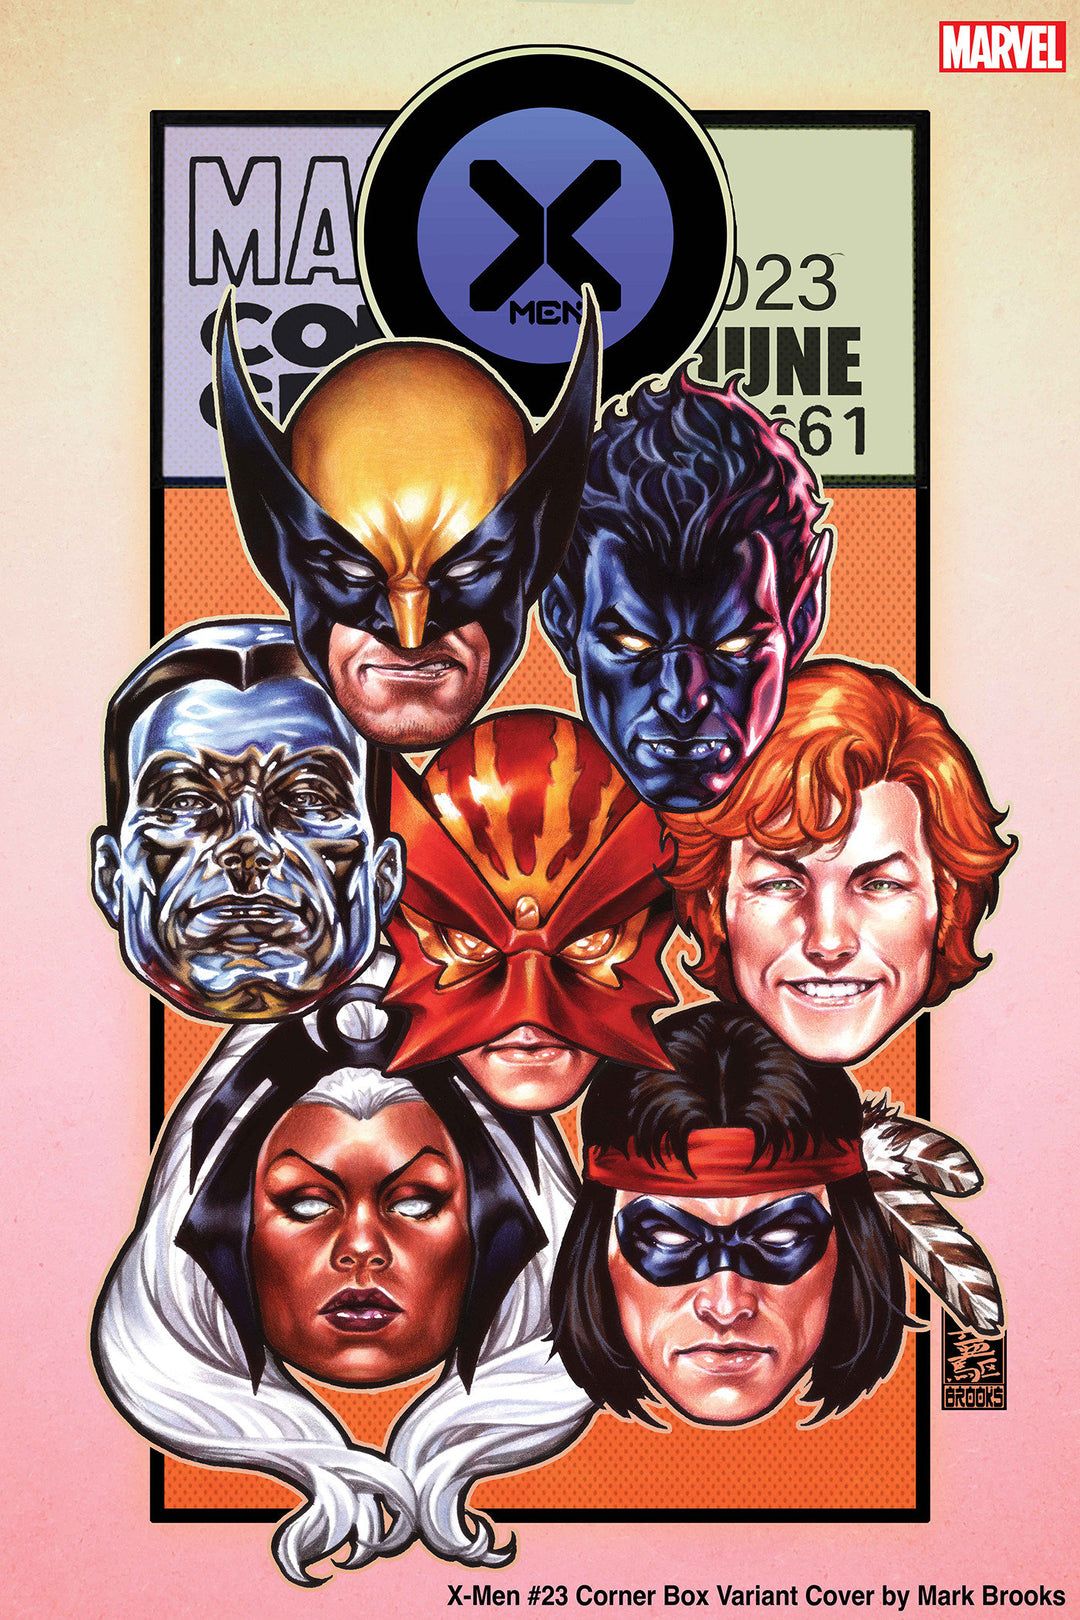 X-Men (2021) #23 Mark Brooks Corner Box Variant